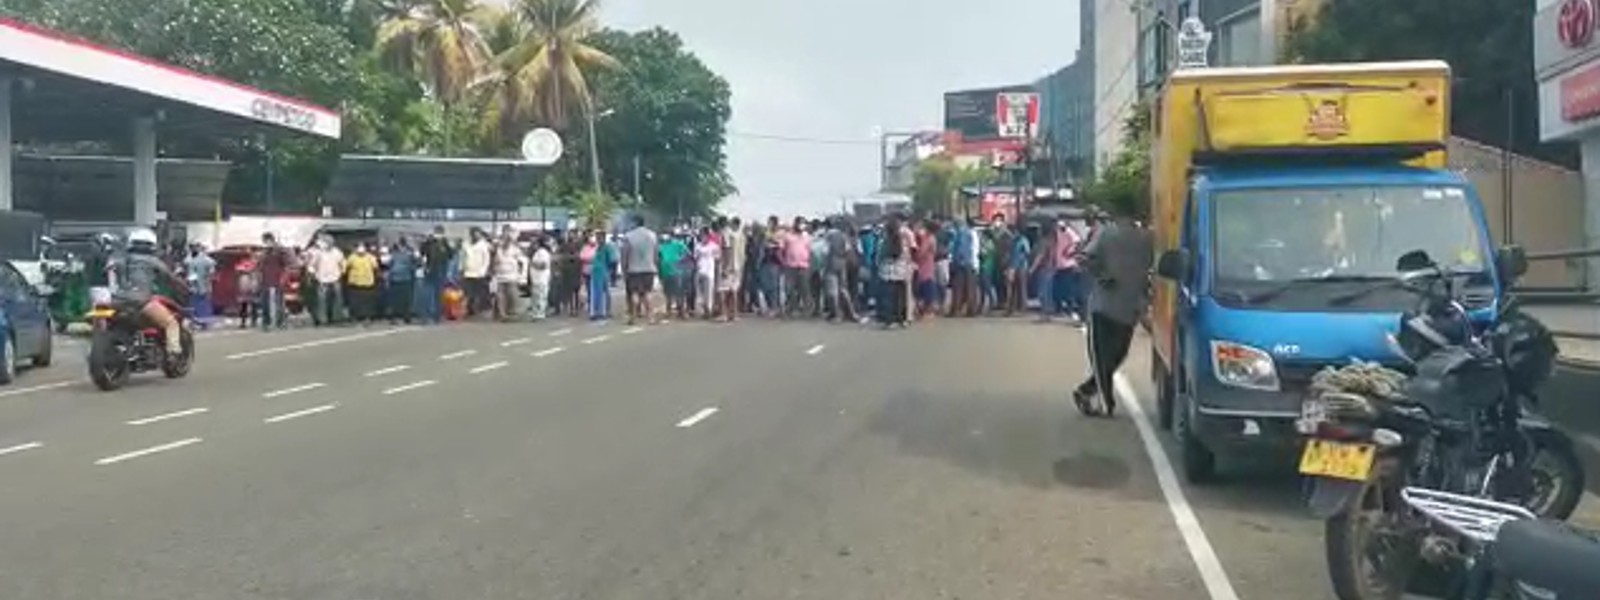 Protest demanding gas at Nawinna hampers traffic